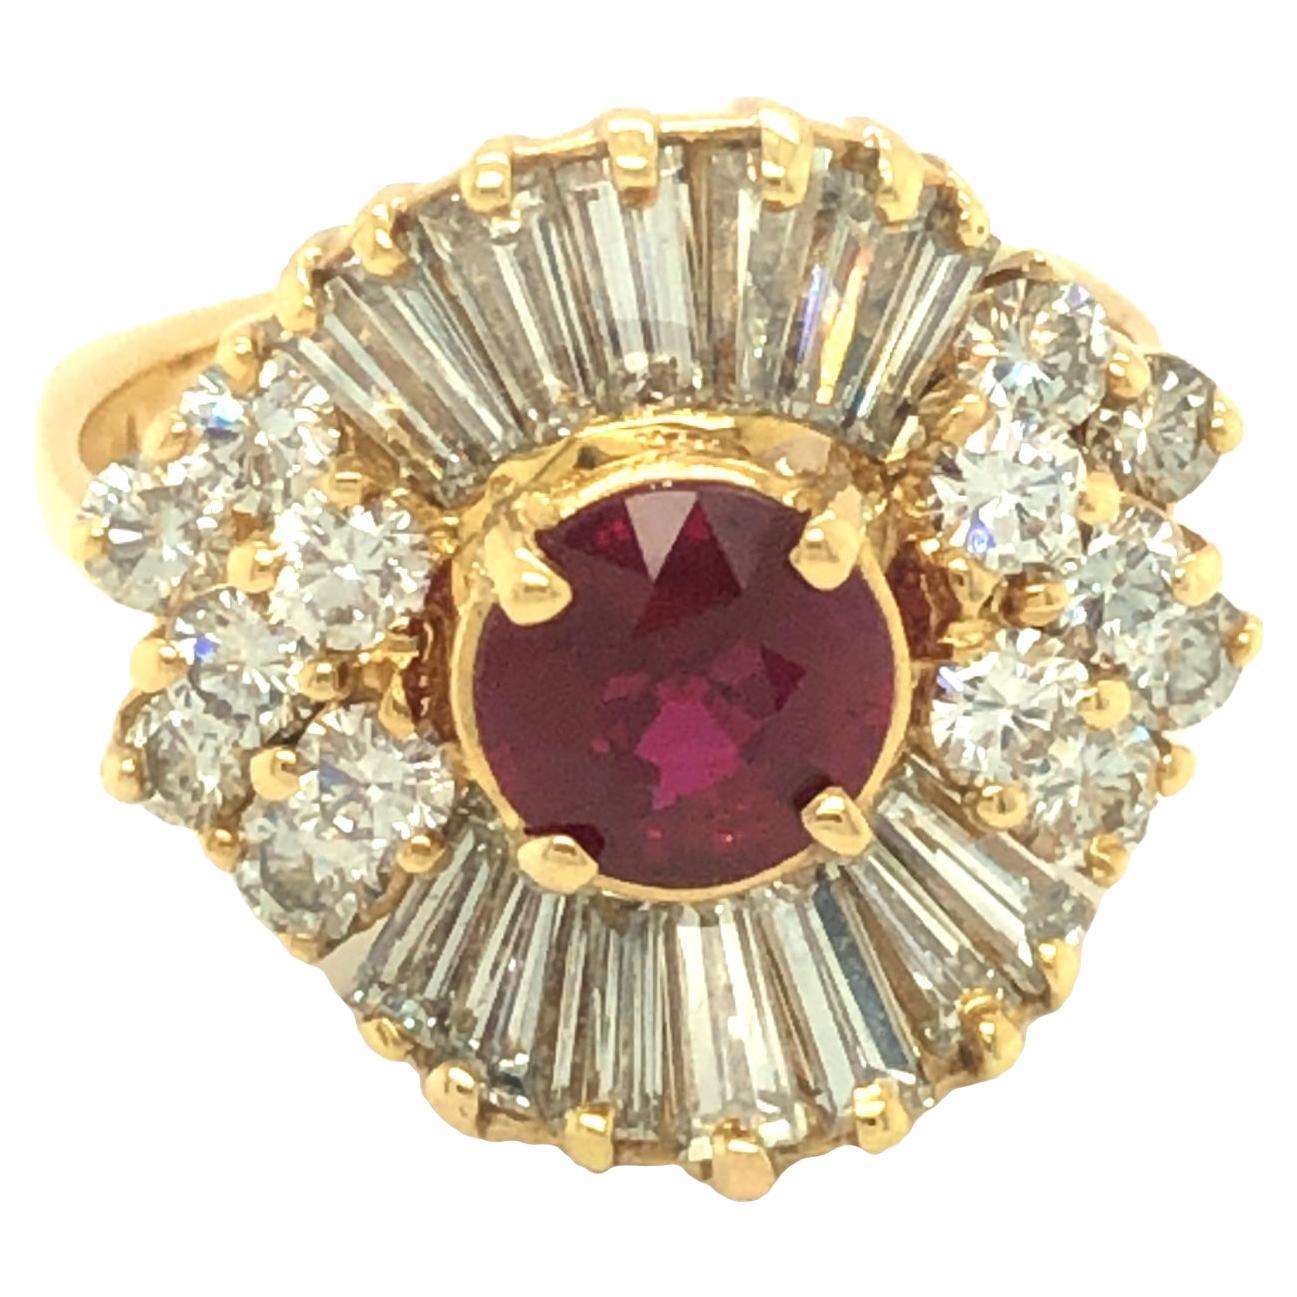 GIA-zertifizierter Burma-Rubin- und Diamant-Ballerina-Ring 18k Gelbgold